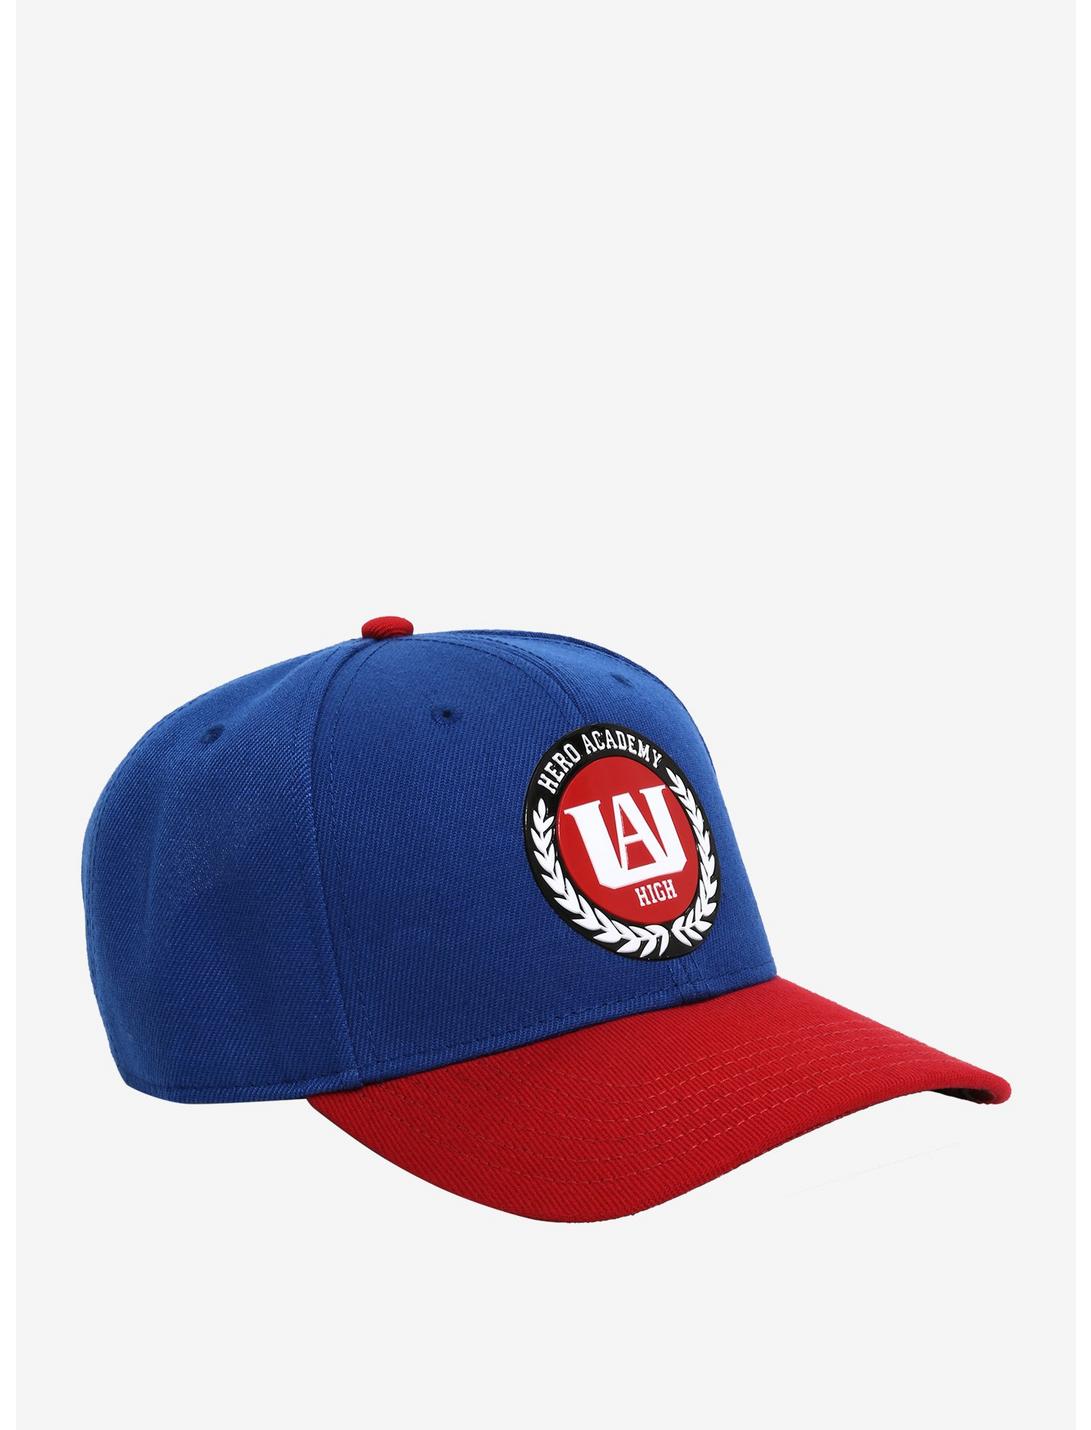 My Hero Academia U.A. High Logo Snapback Hat, , hi-res